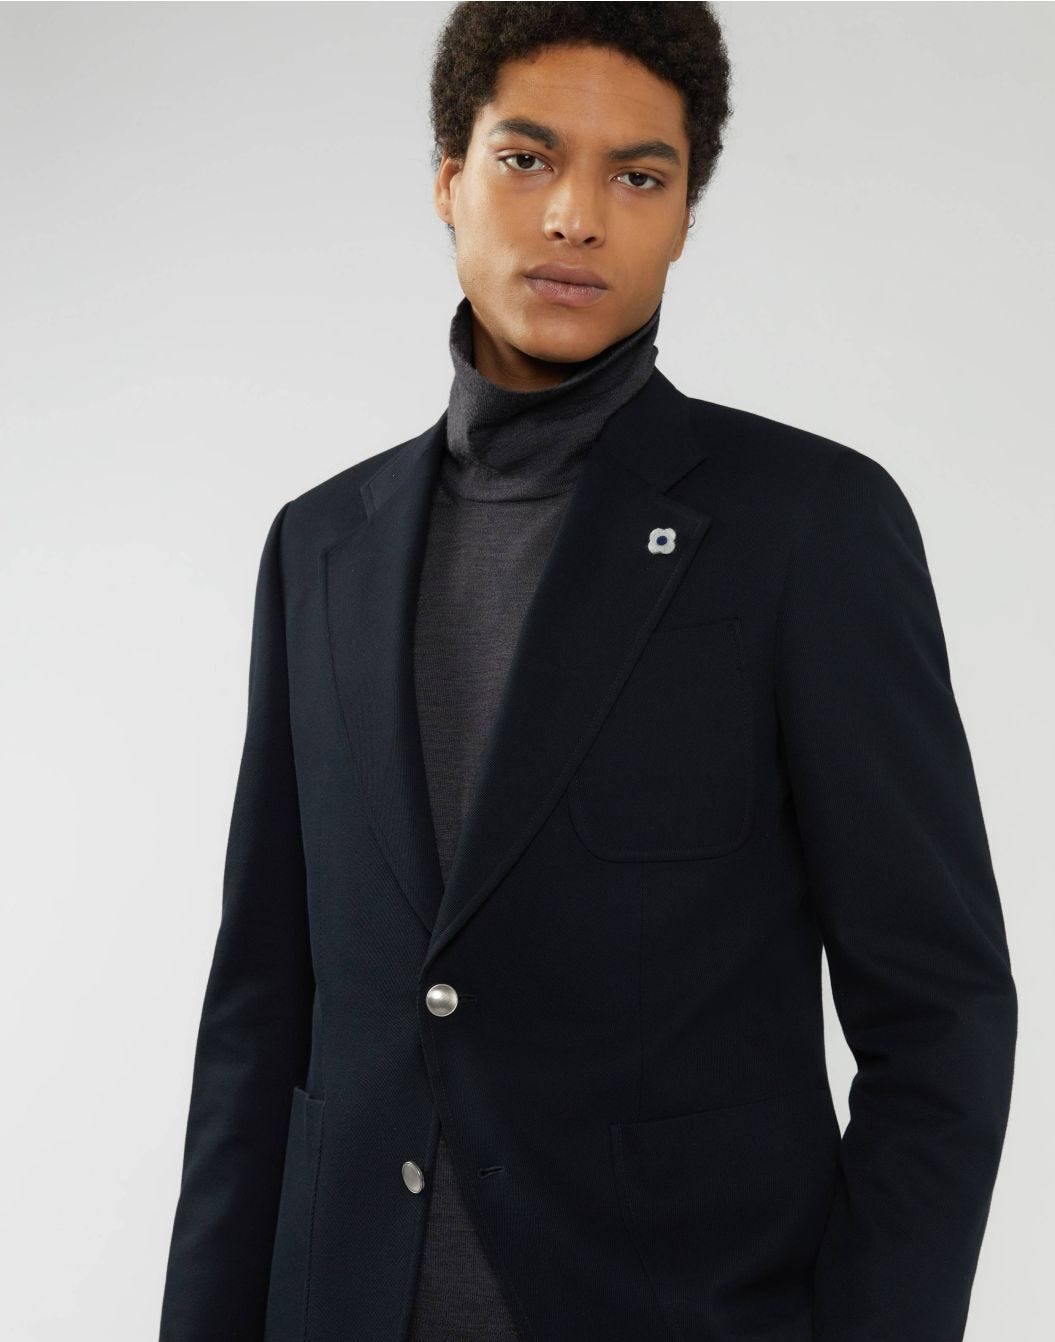 Blue woollen suit with a diagonal pattern - Attitude